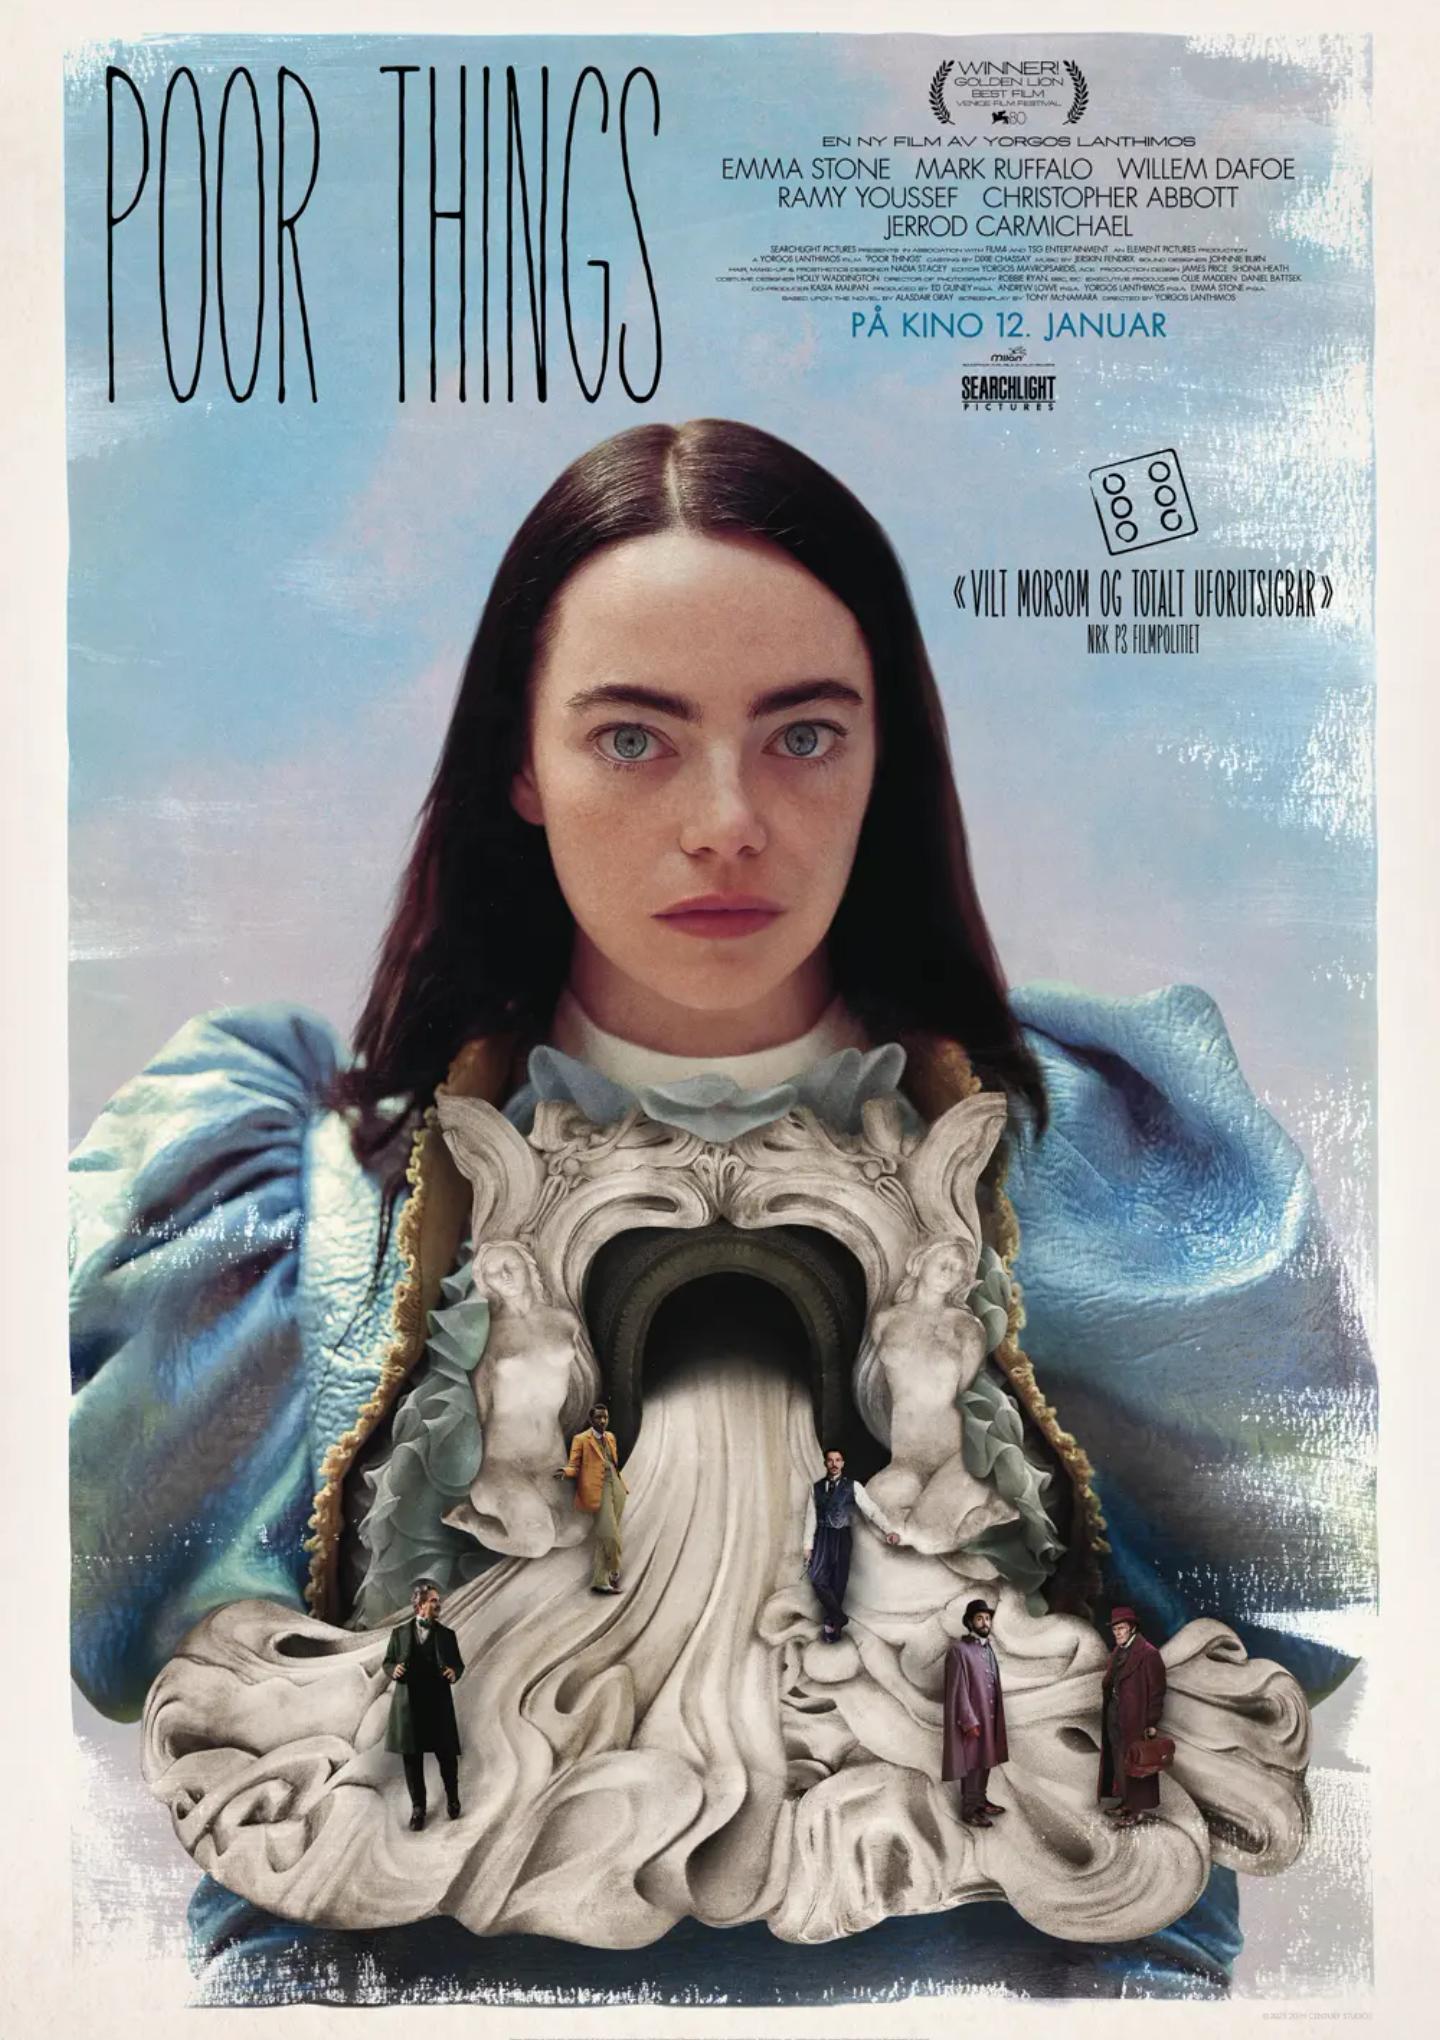 Plakat for 'Poor Things'